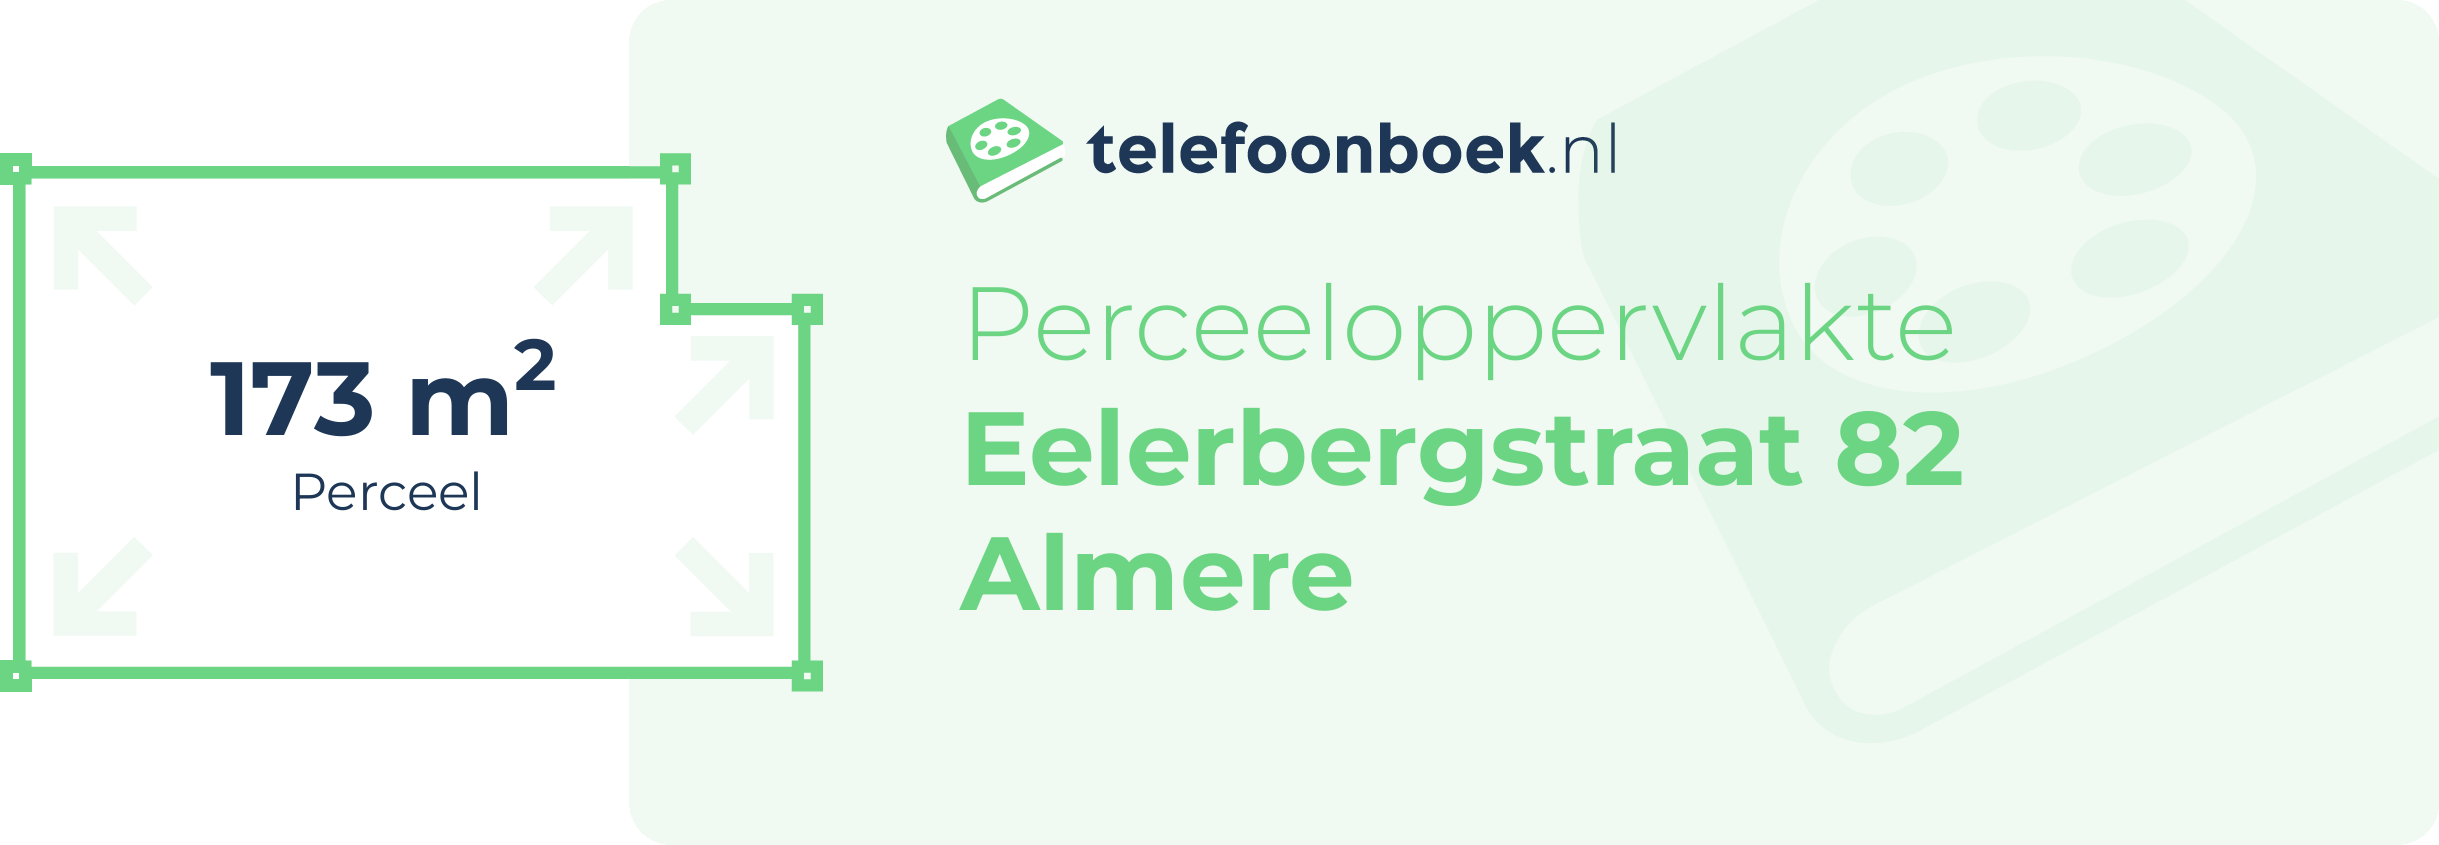 Perceeloppervlakte Eelerbergstraat 82 Almere